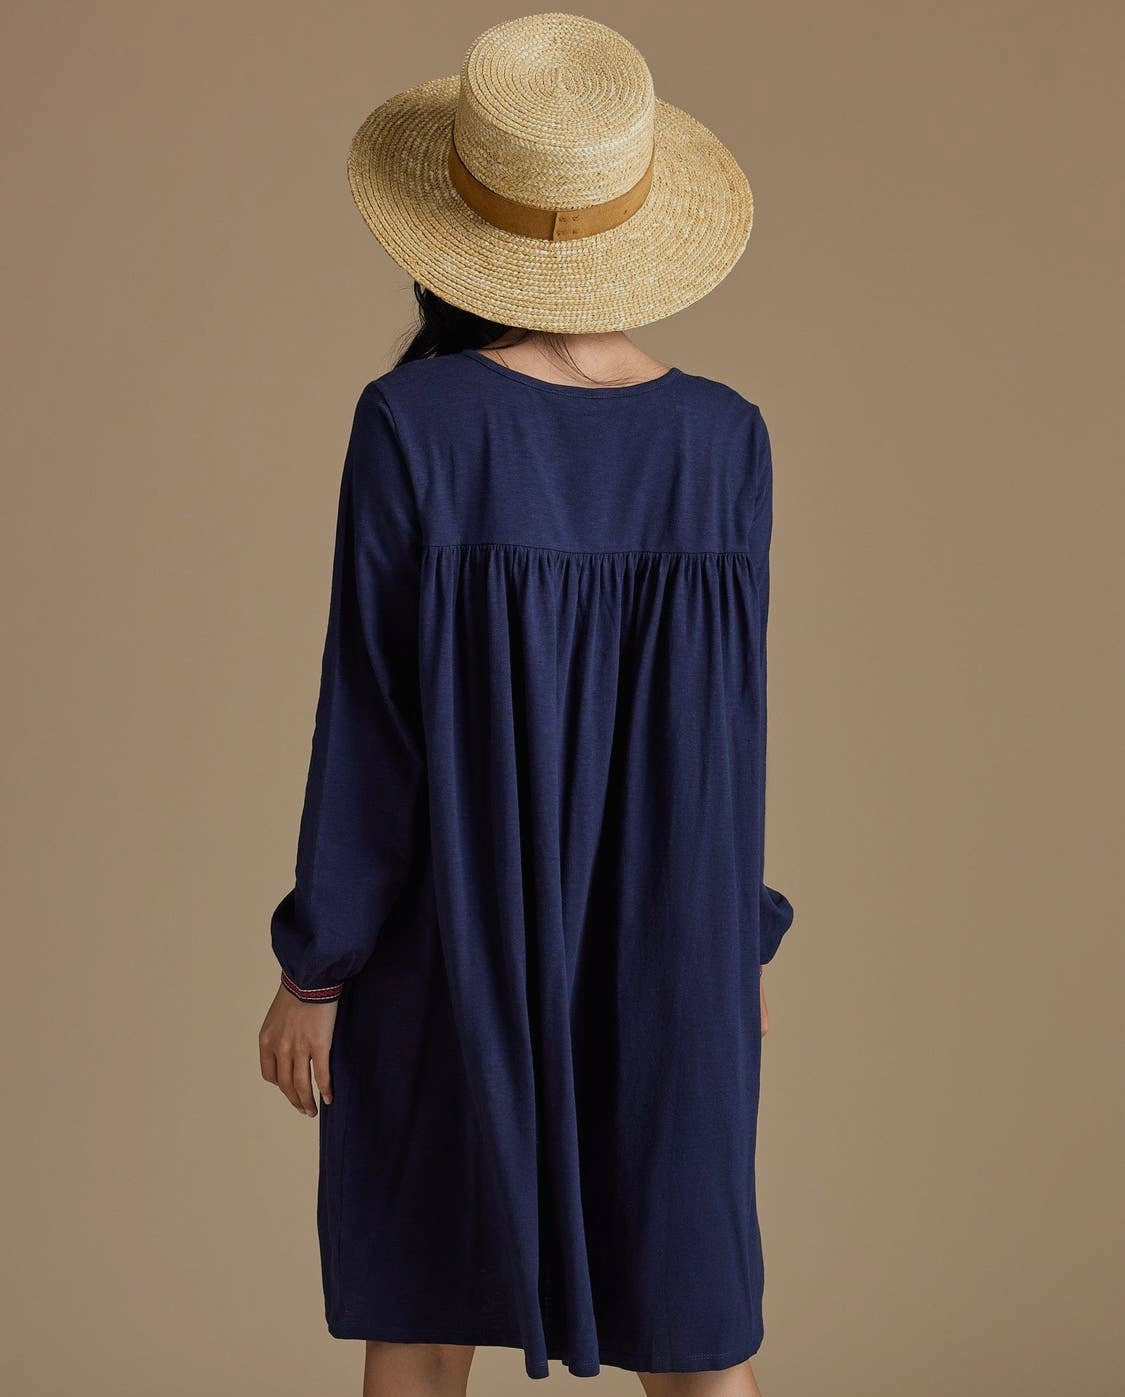 Madeline Tassel Blue Dress | Downeast